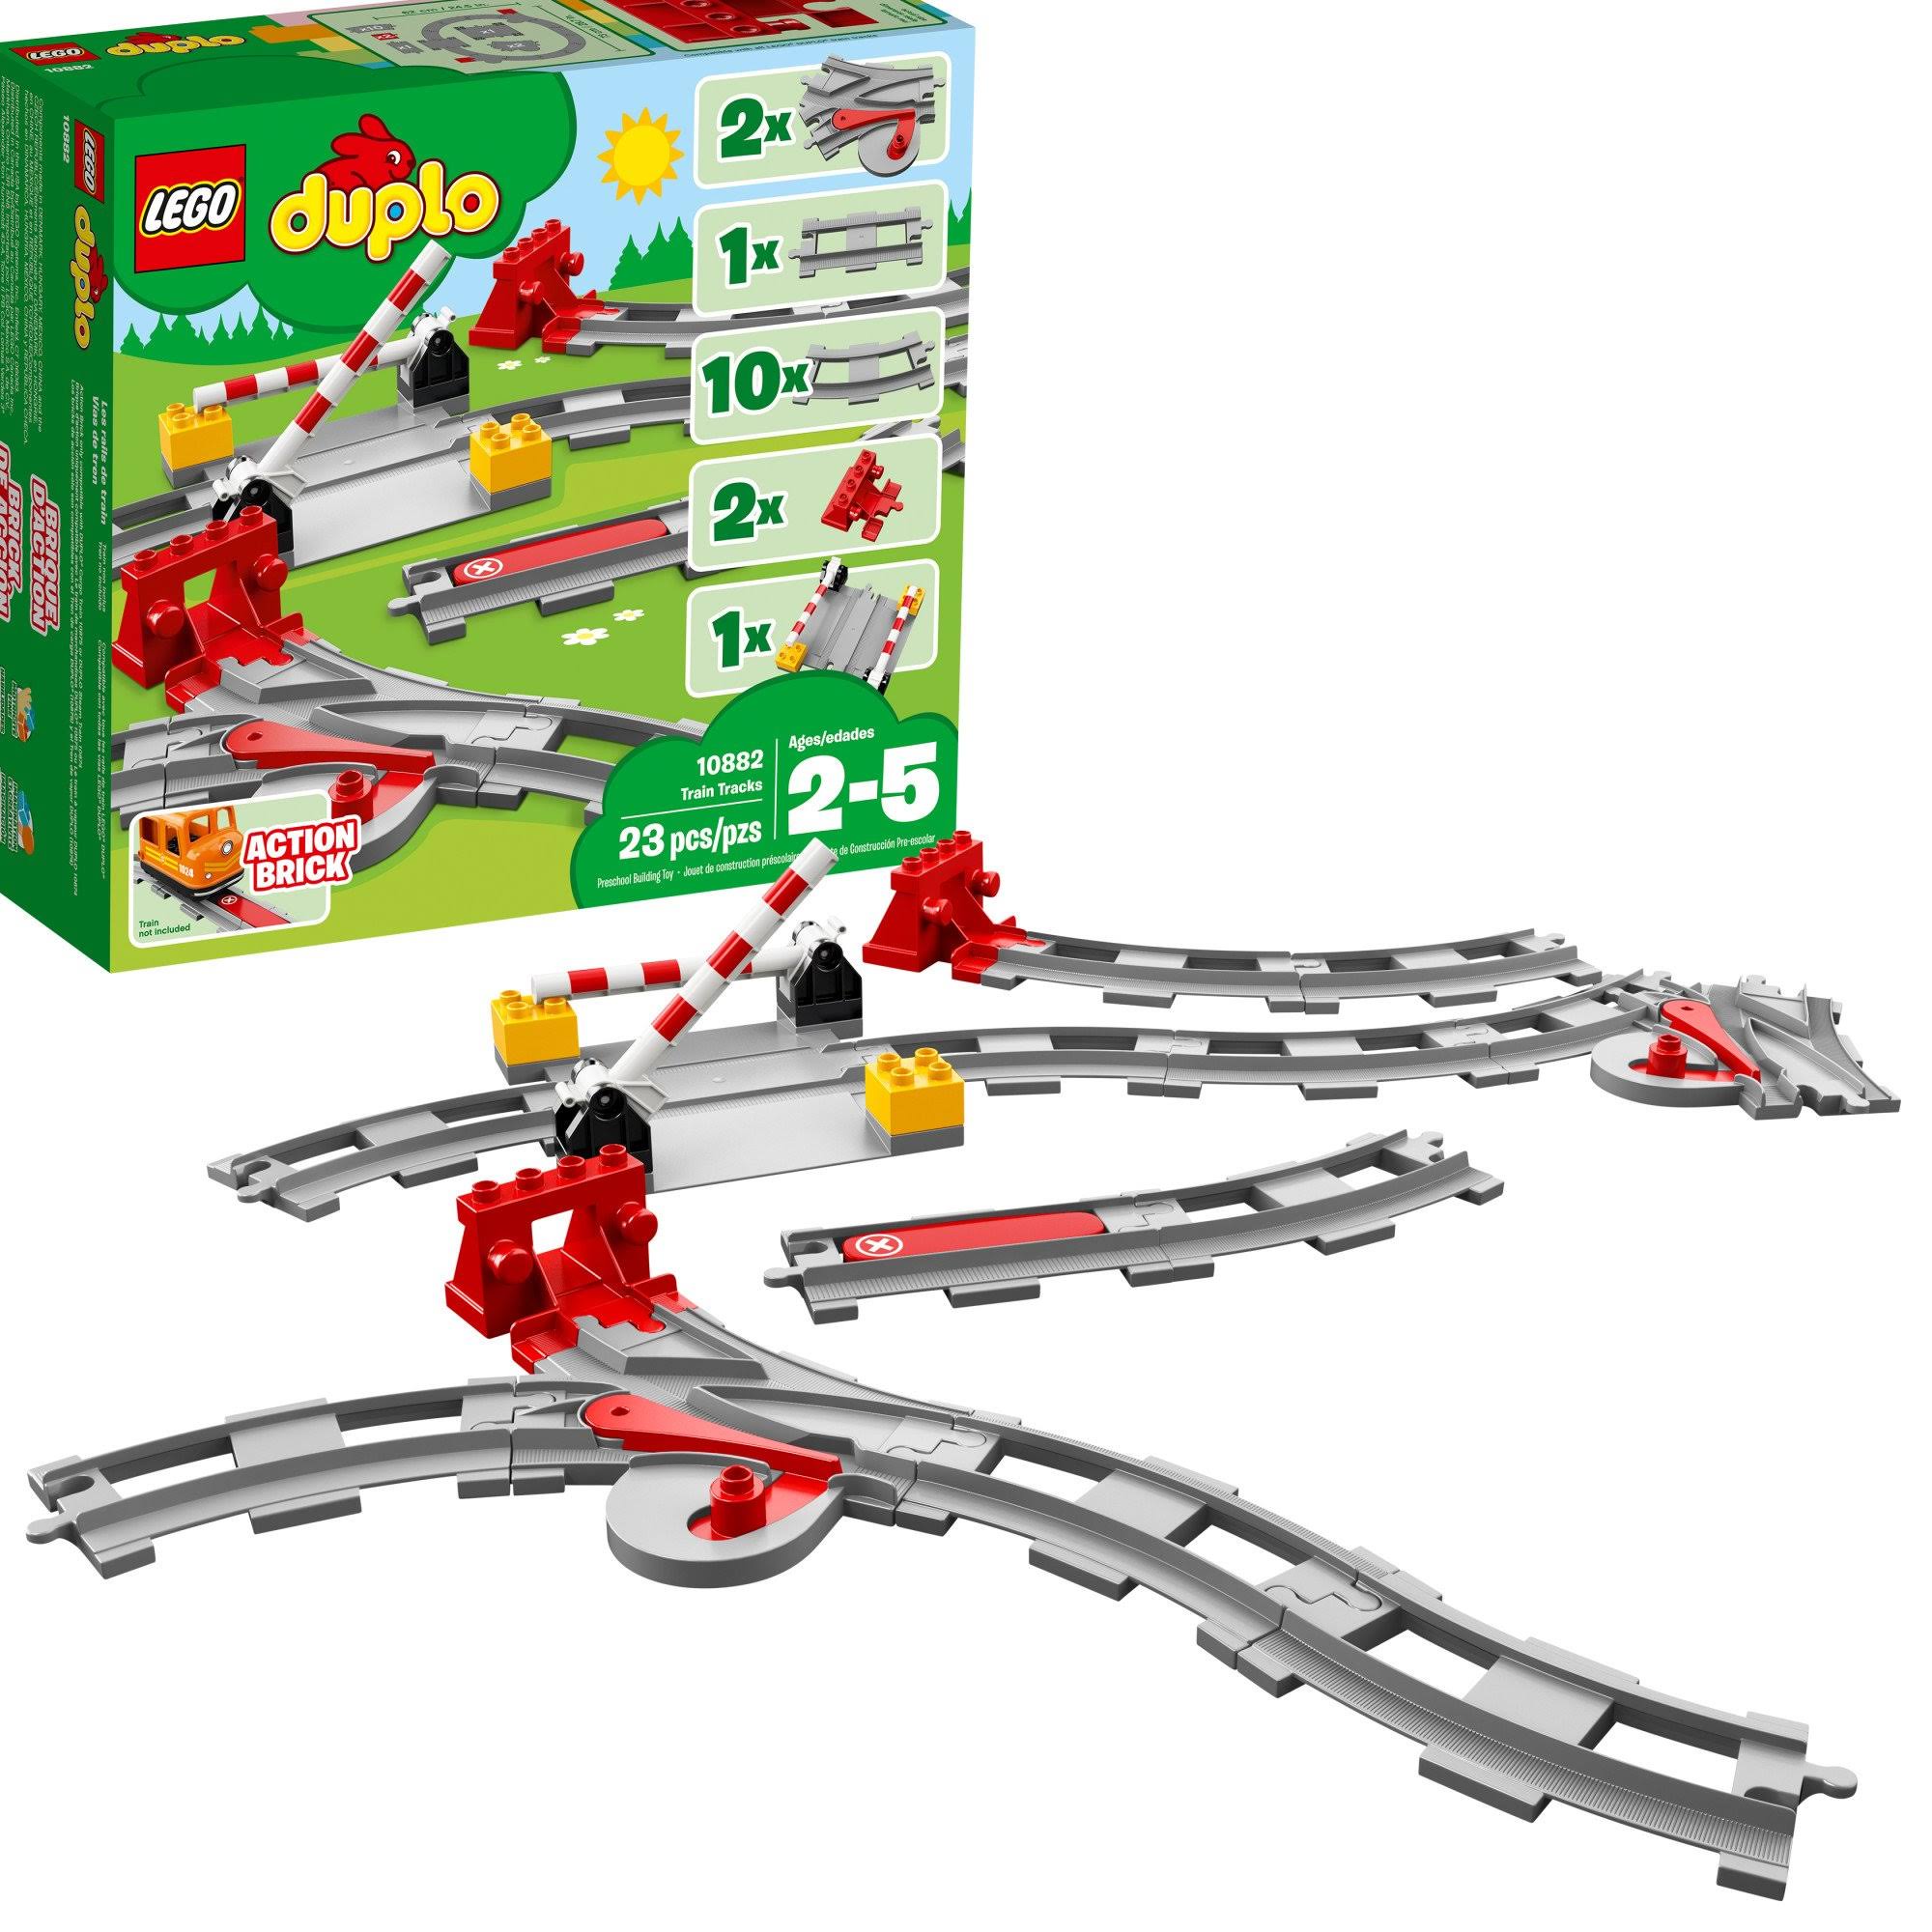 Lego 10882 Duplo Train Tracks